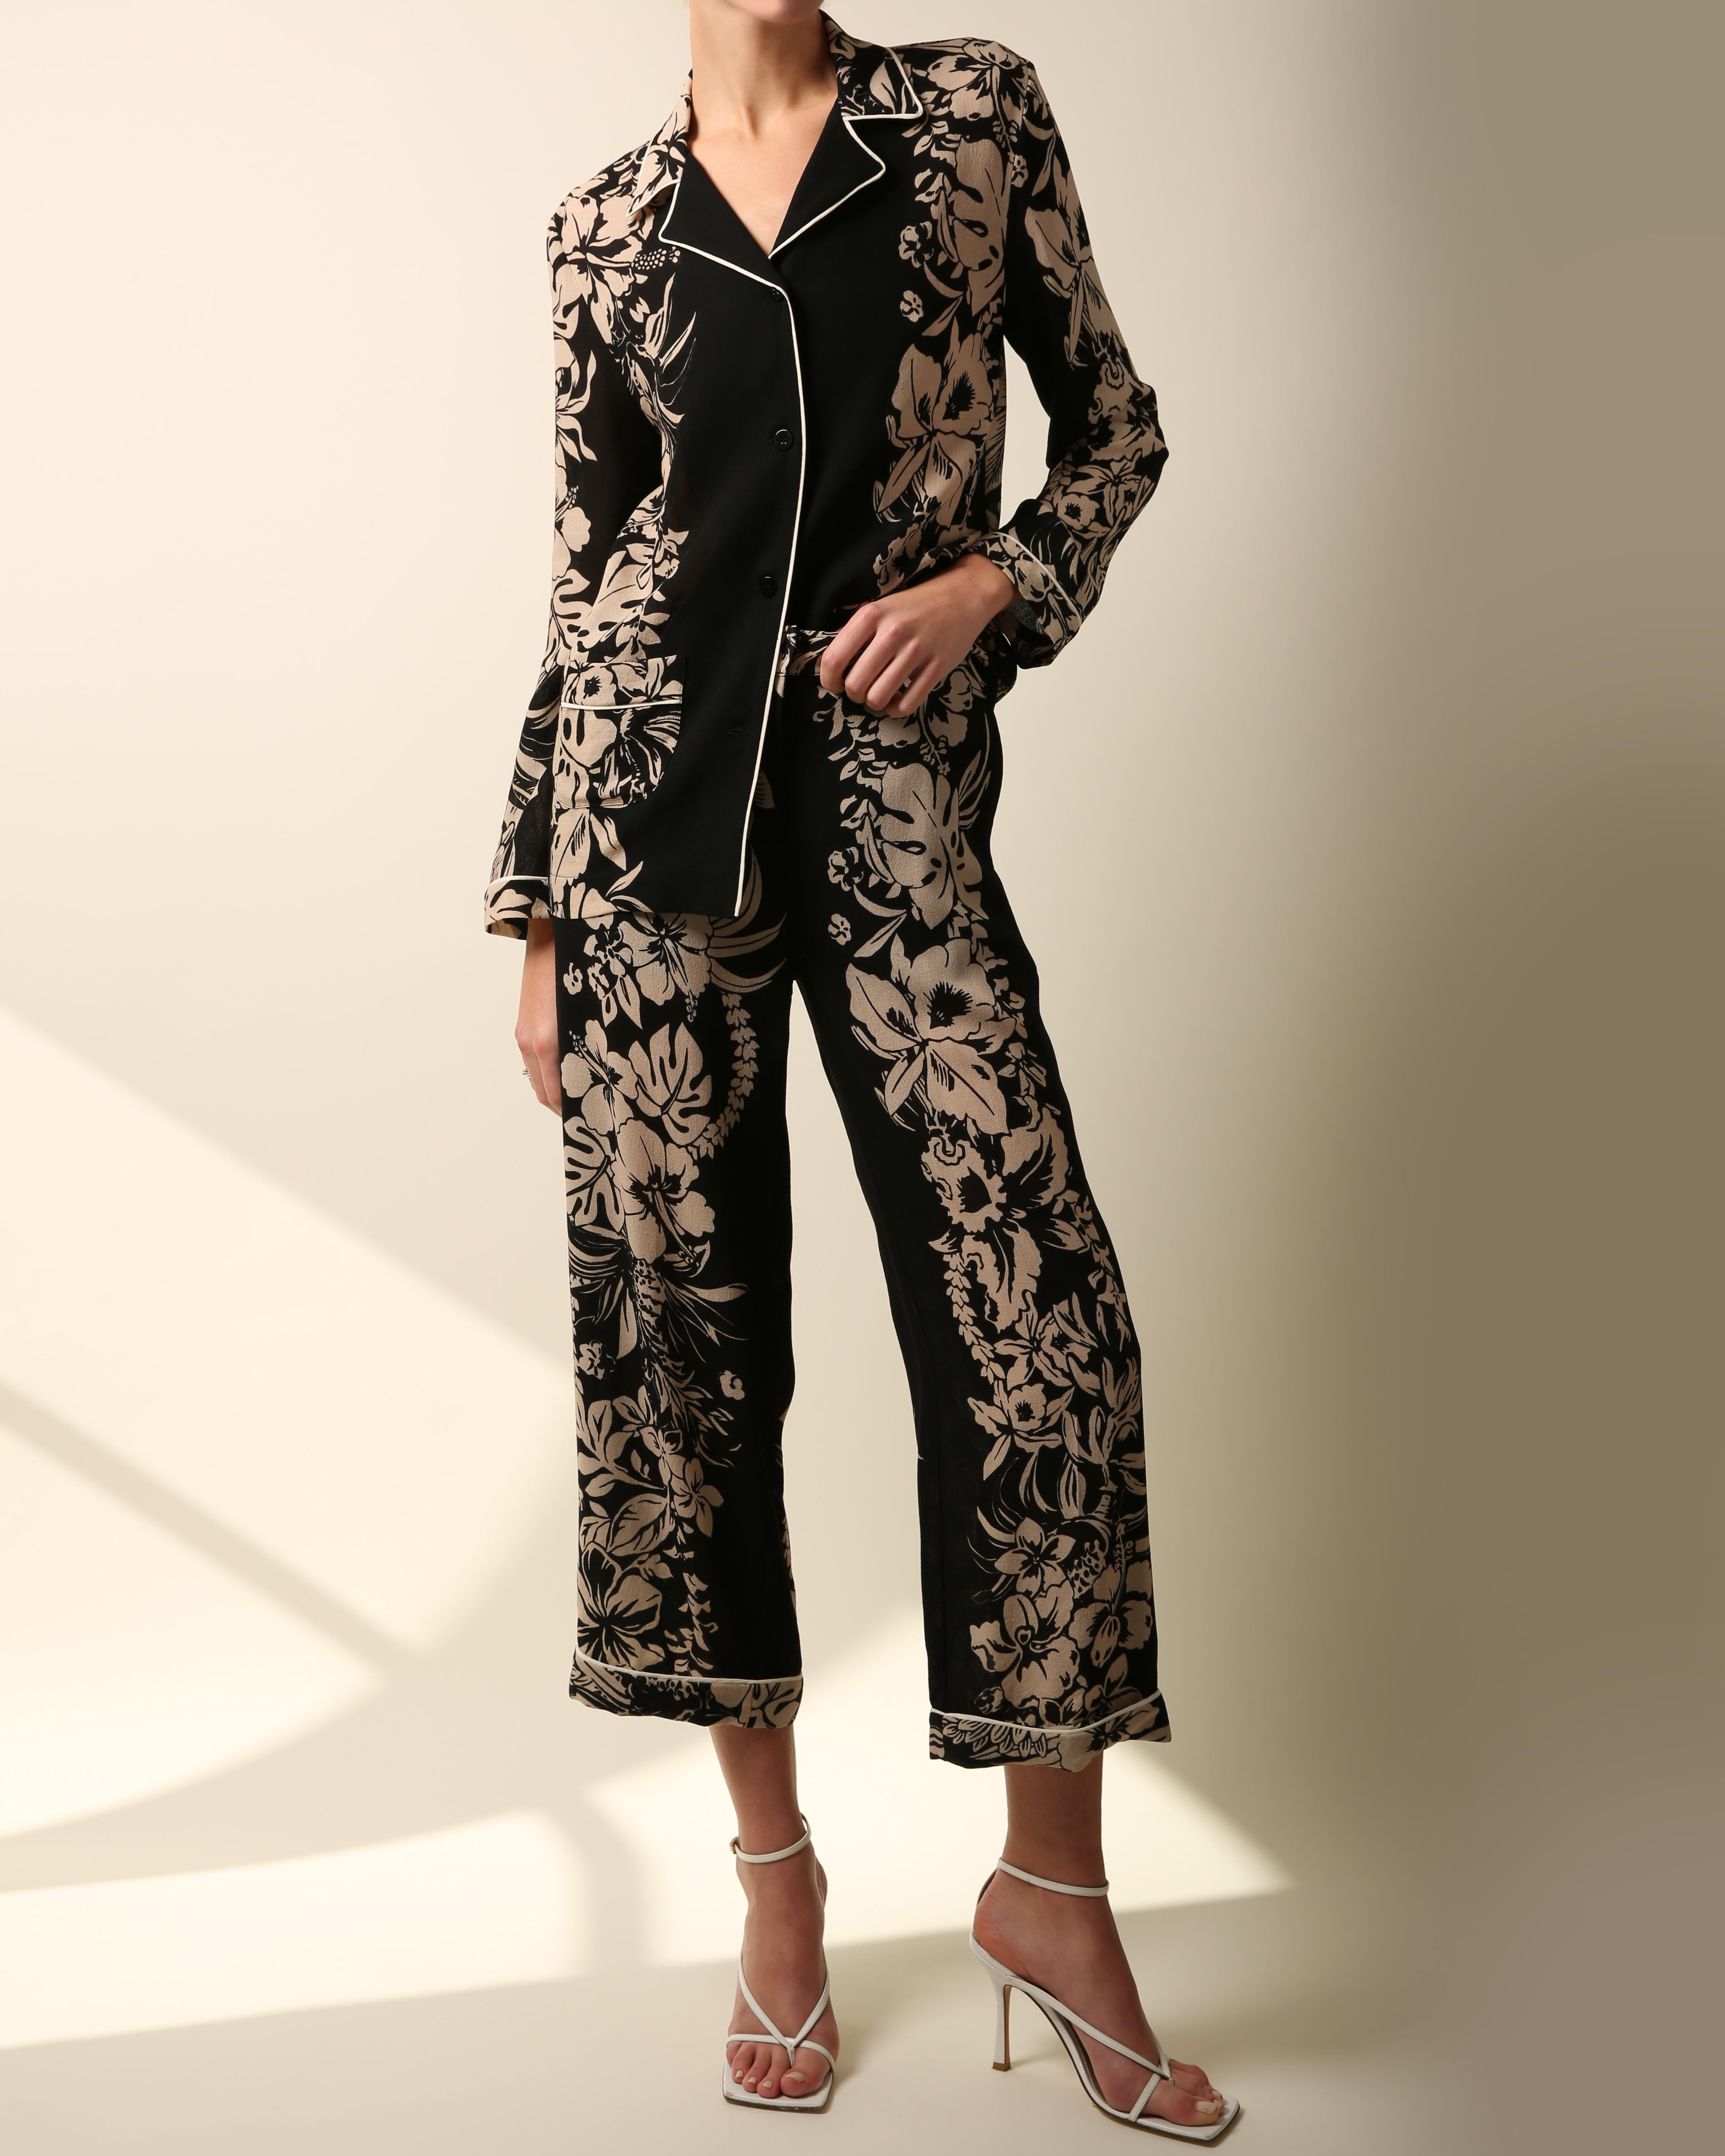 Valentino pyjama style black nude floral print blouse wide dress pants jumpsuit For Sale 1